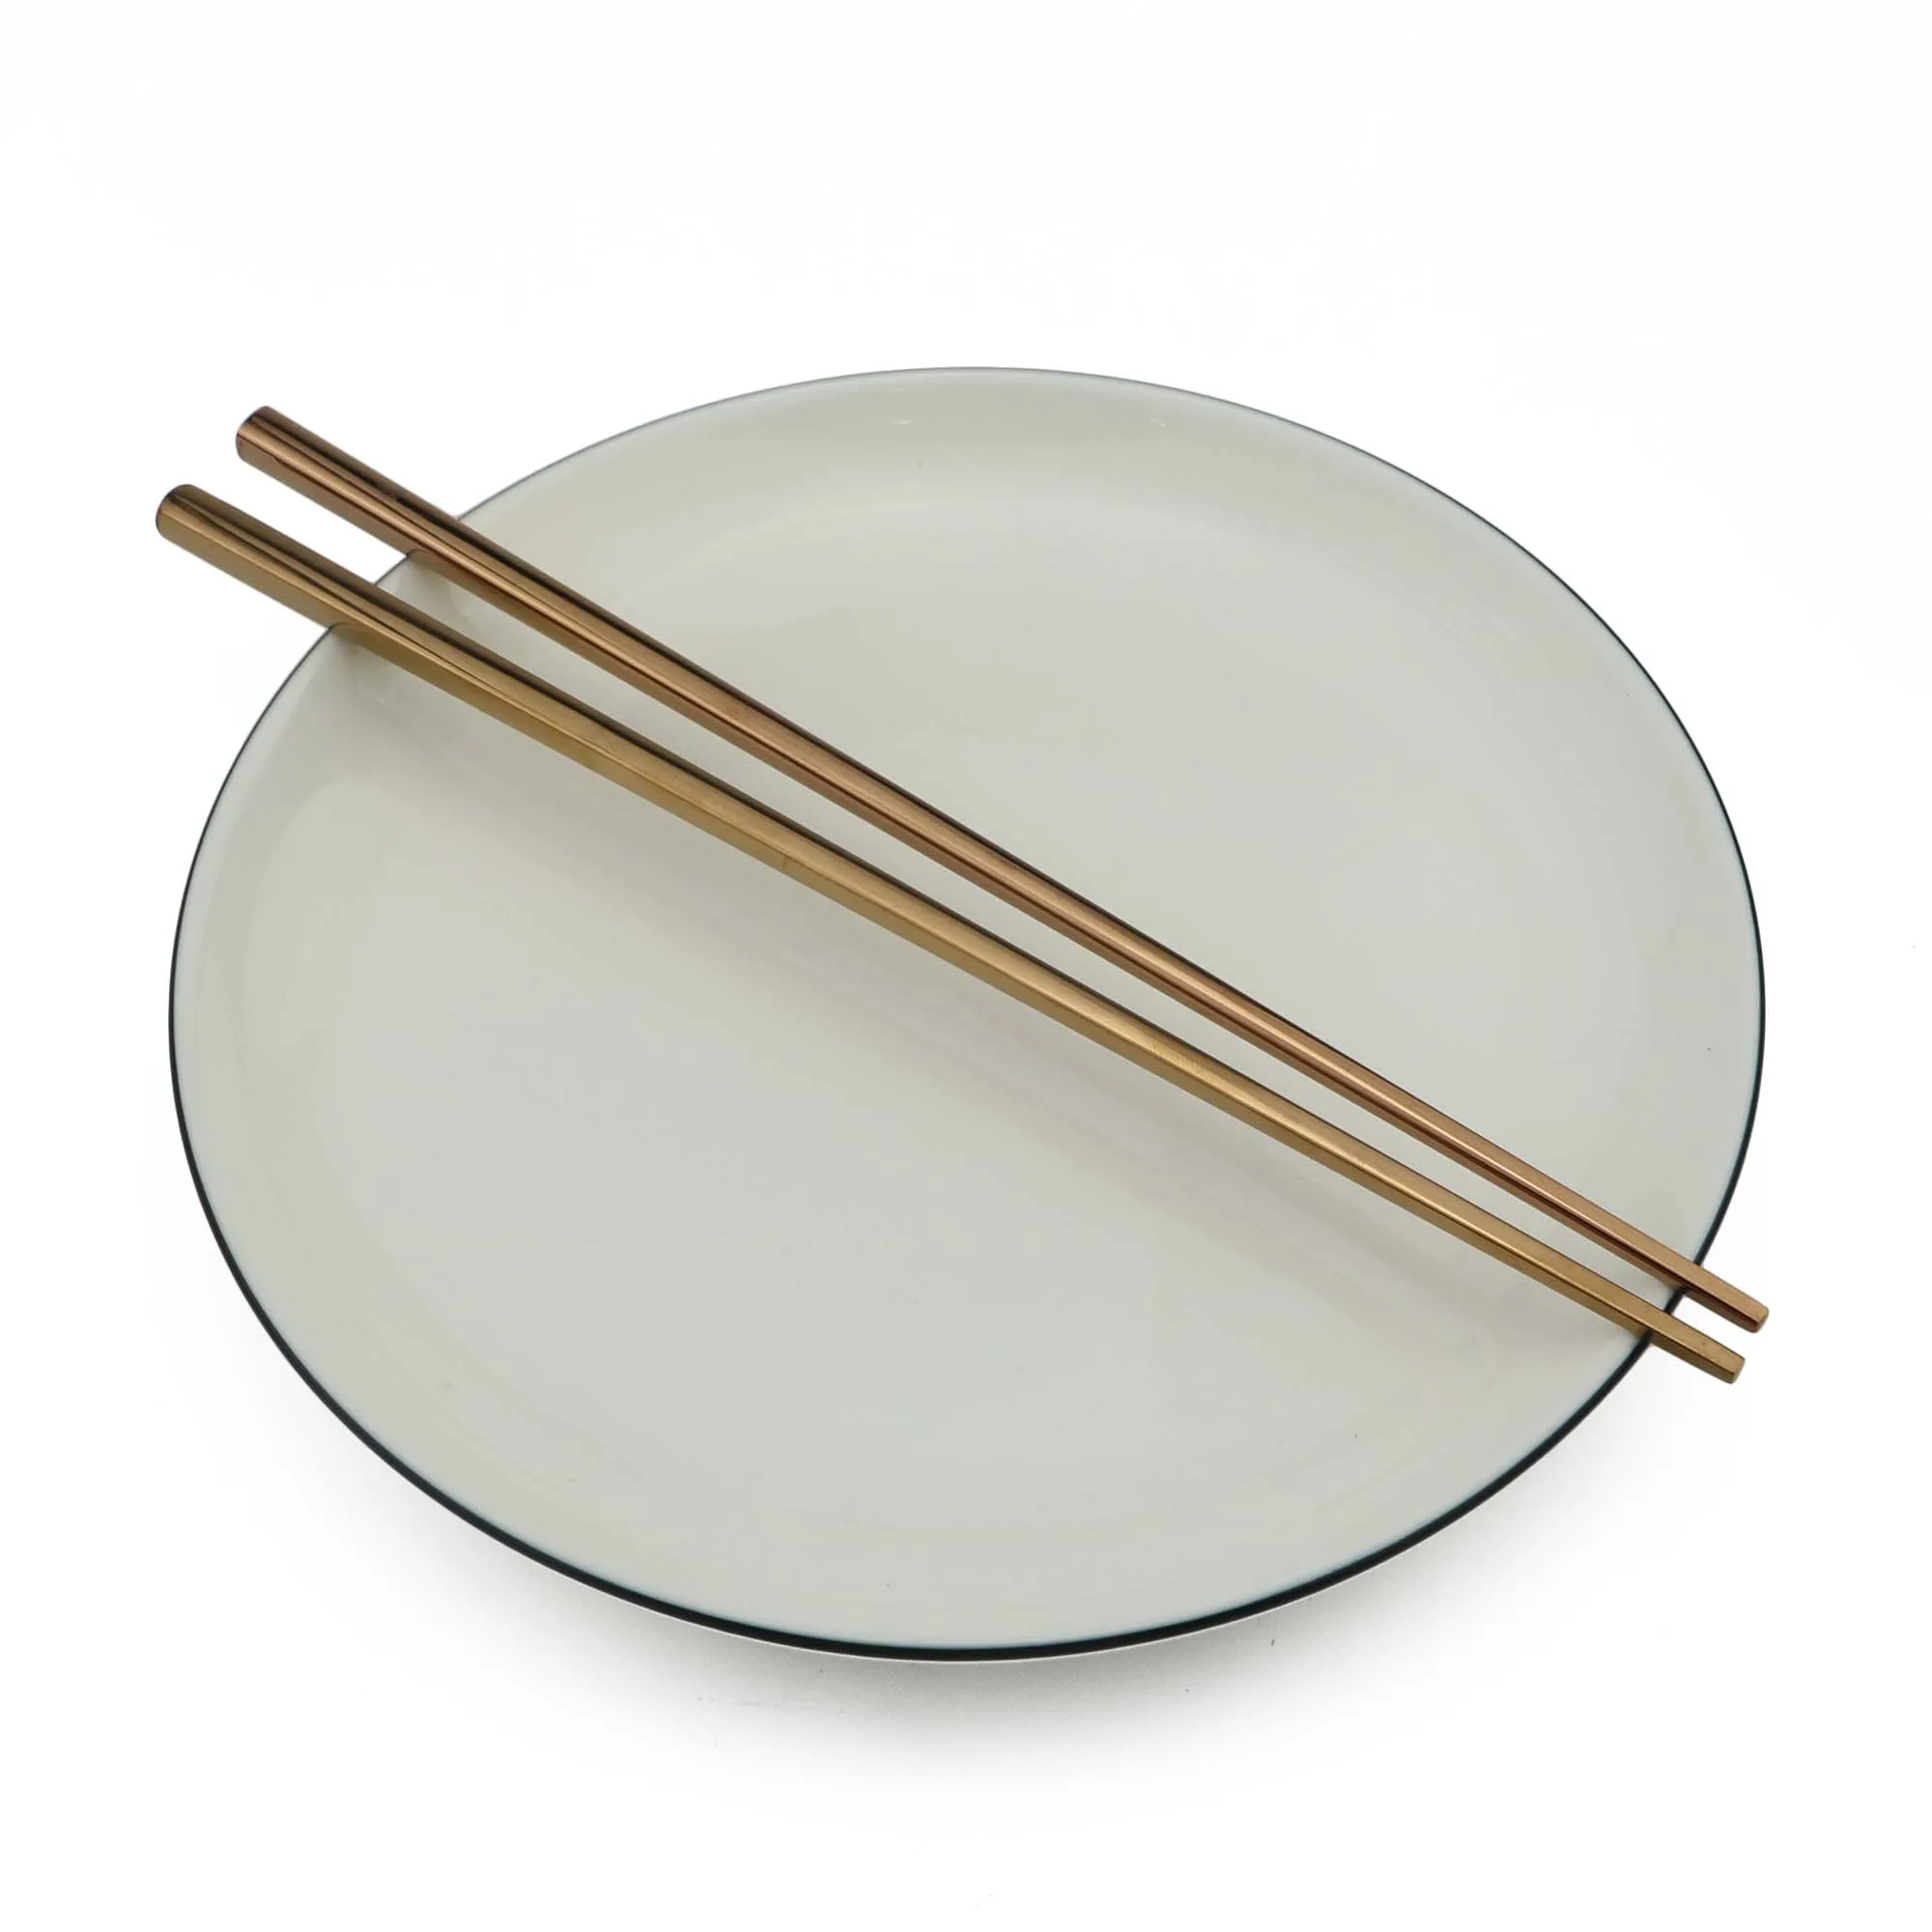 Grade Kitchen Chinese Chopsticks Stainless Steel Tableware Rainbow Dinnerware 